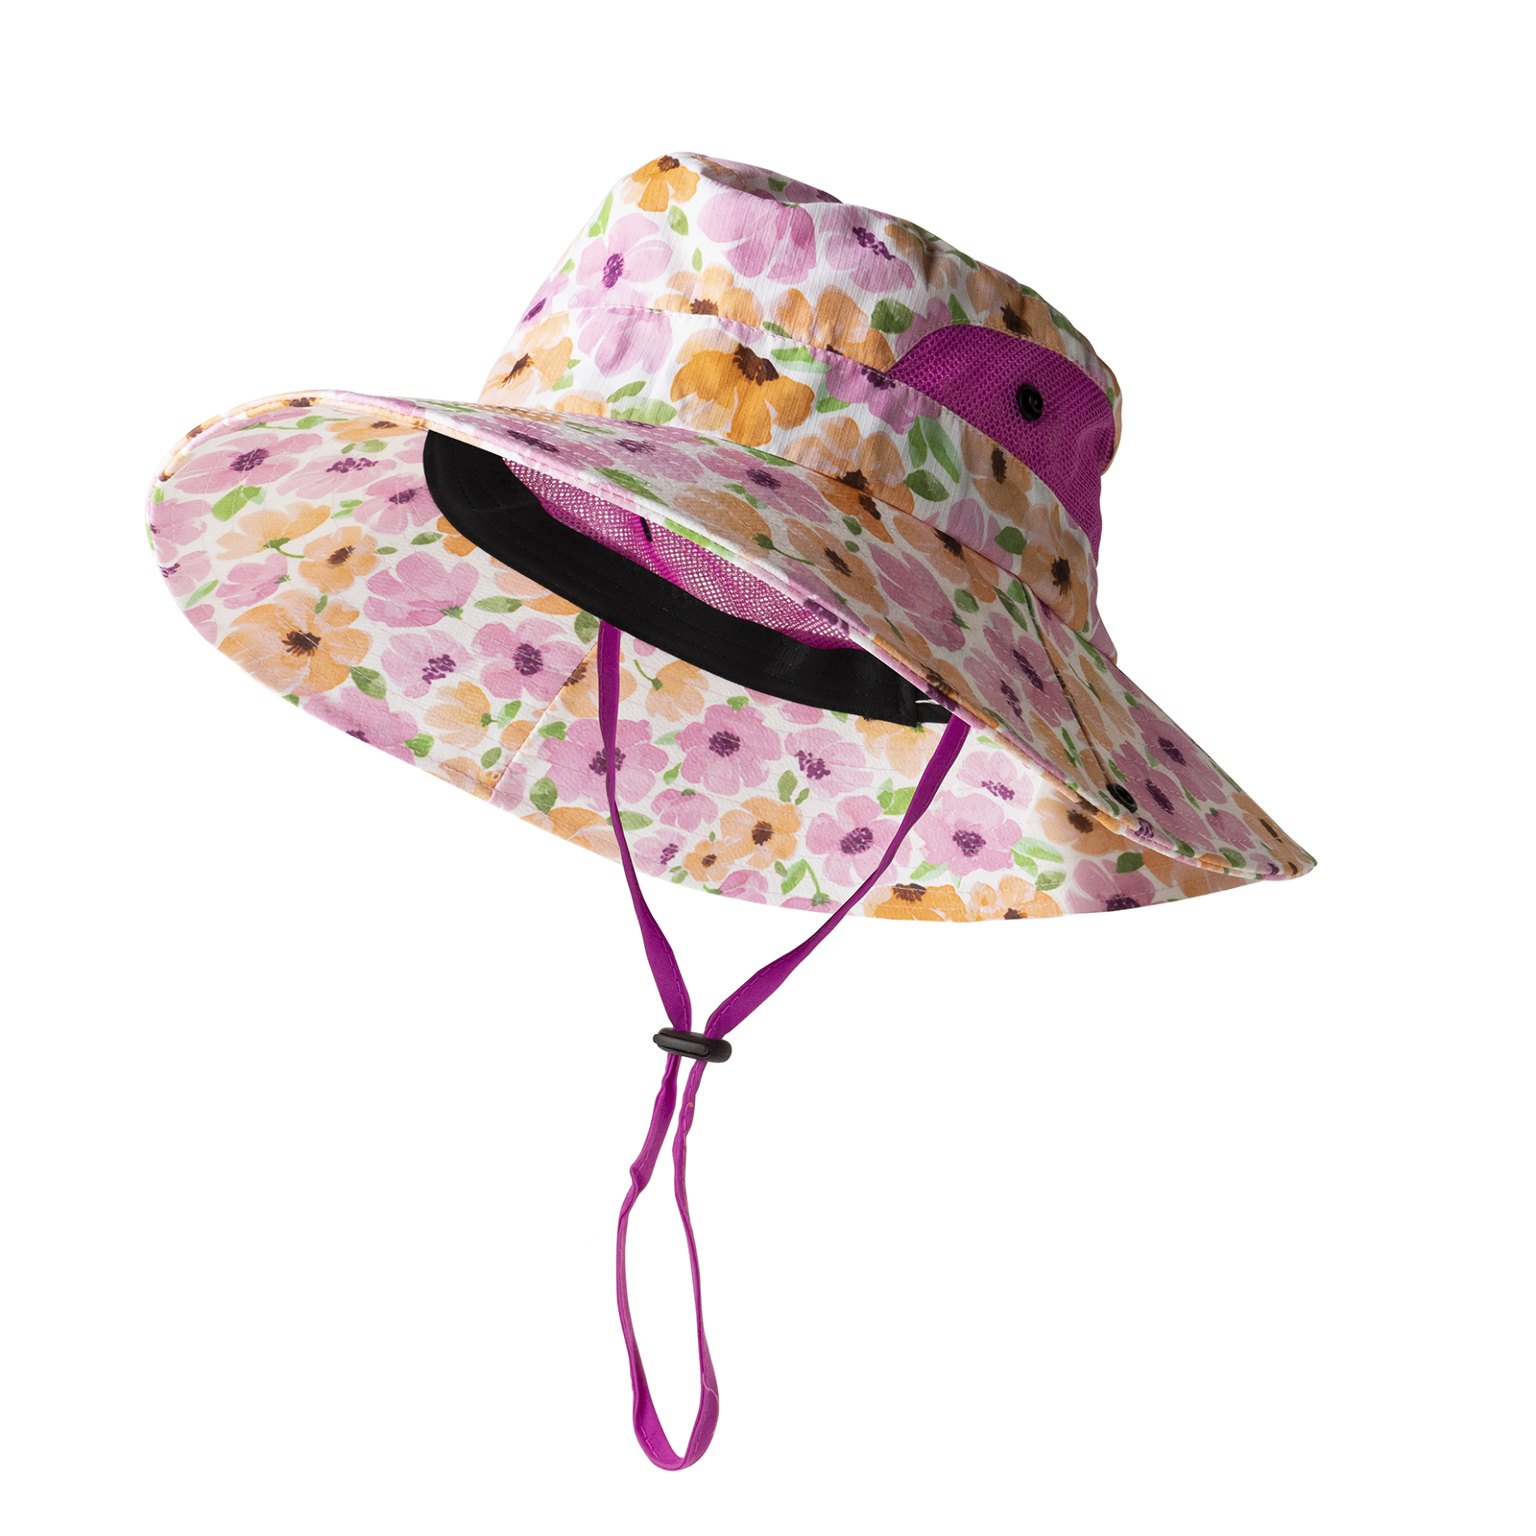 Gardening Hats - Foldable, 4 Flower Styles